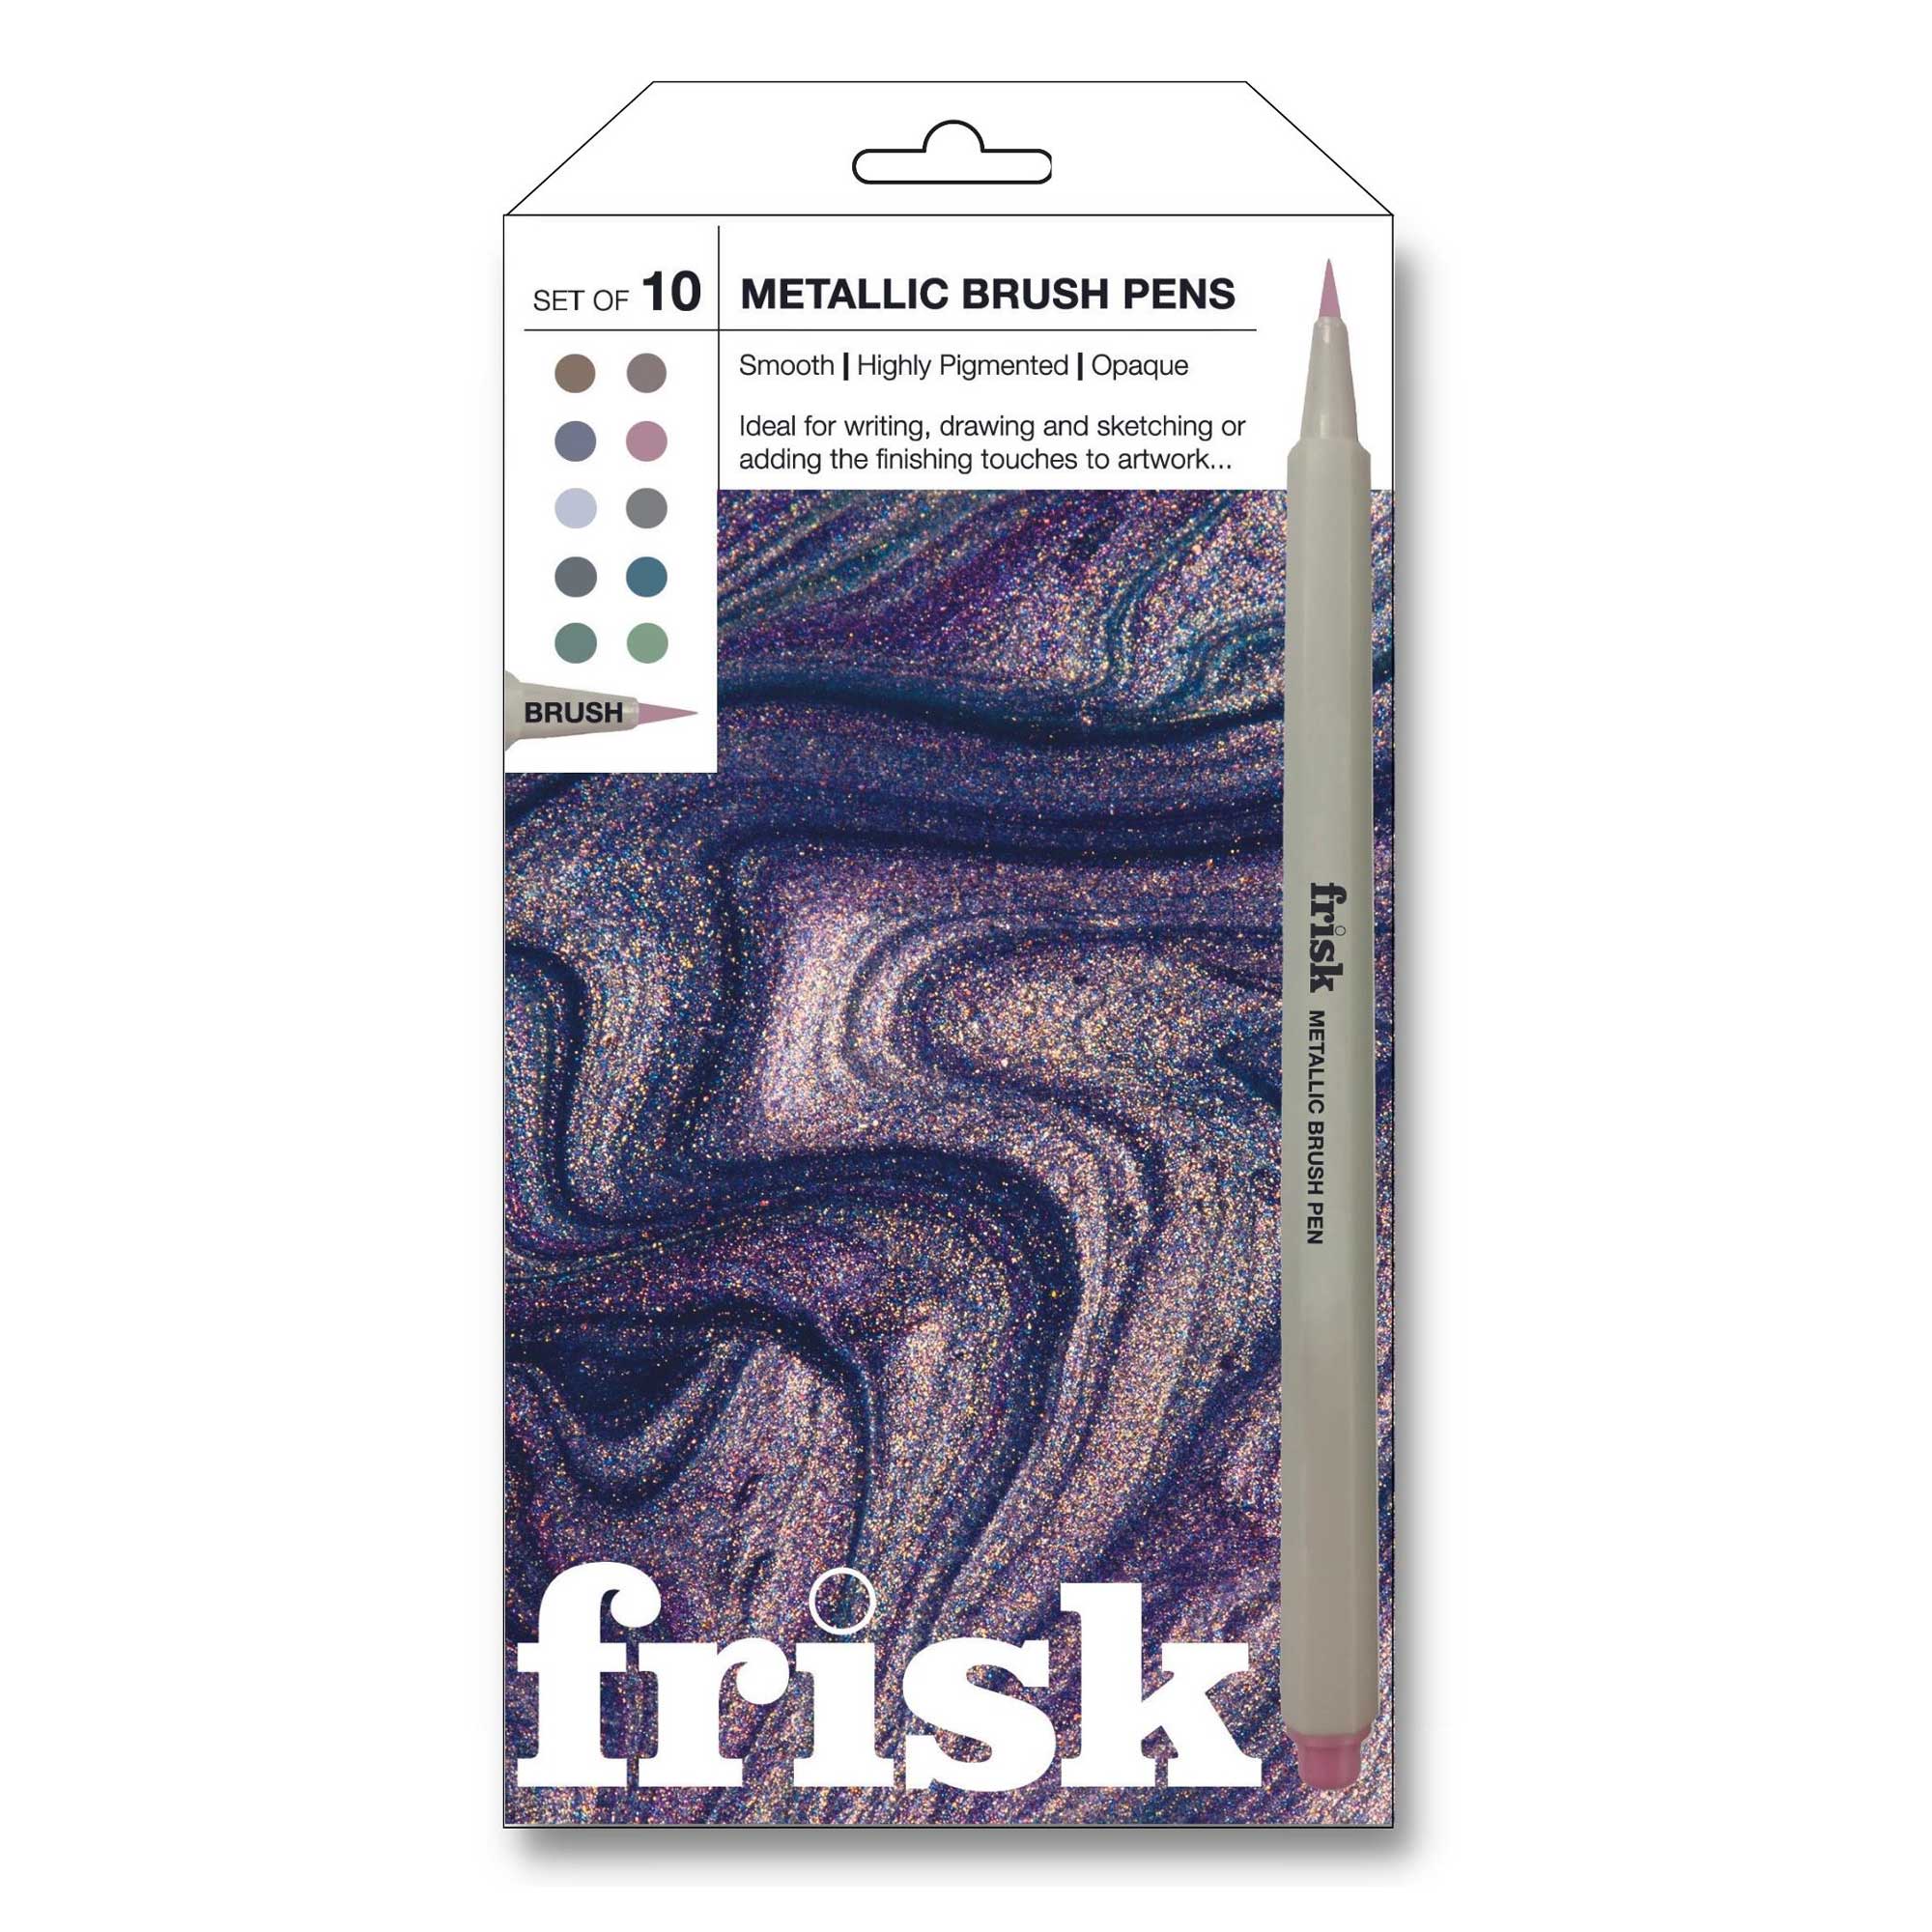 Frisk Metallic Markers Set of 10 - 2mm